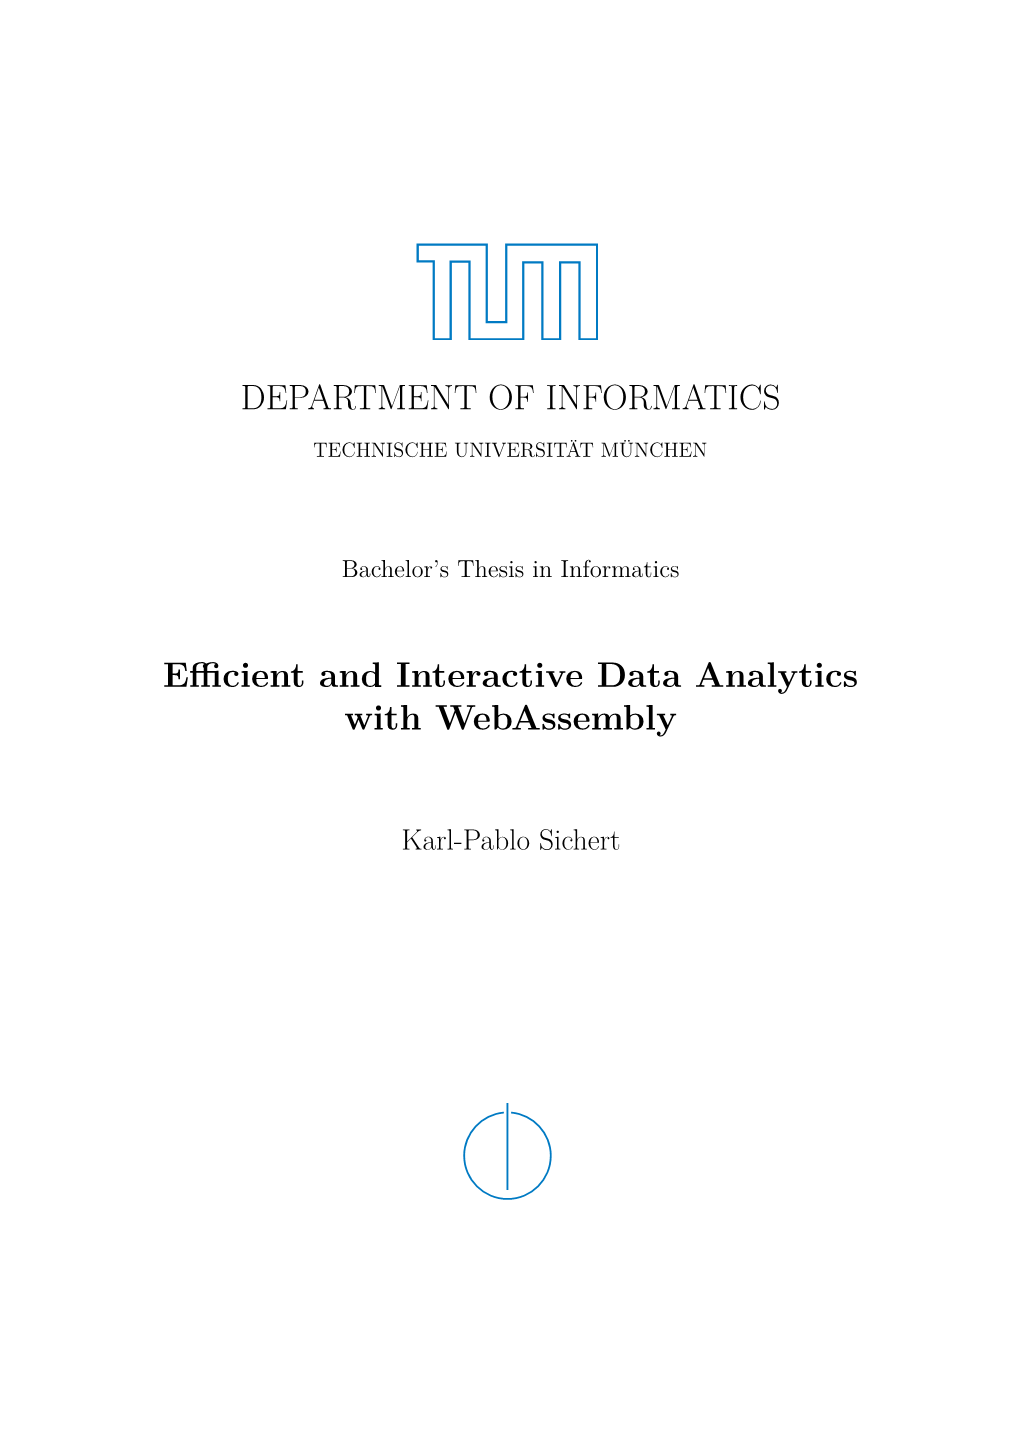 DEPARTMENT of INFORMATICS Efficient and Interactive Data